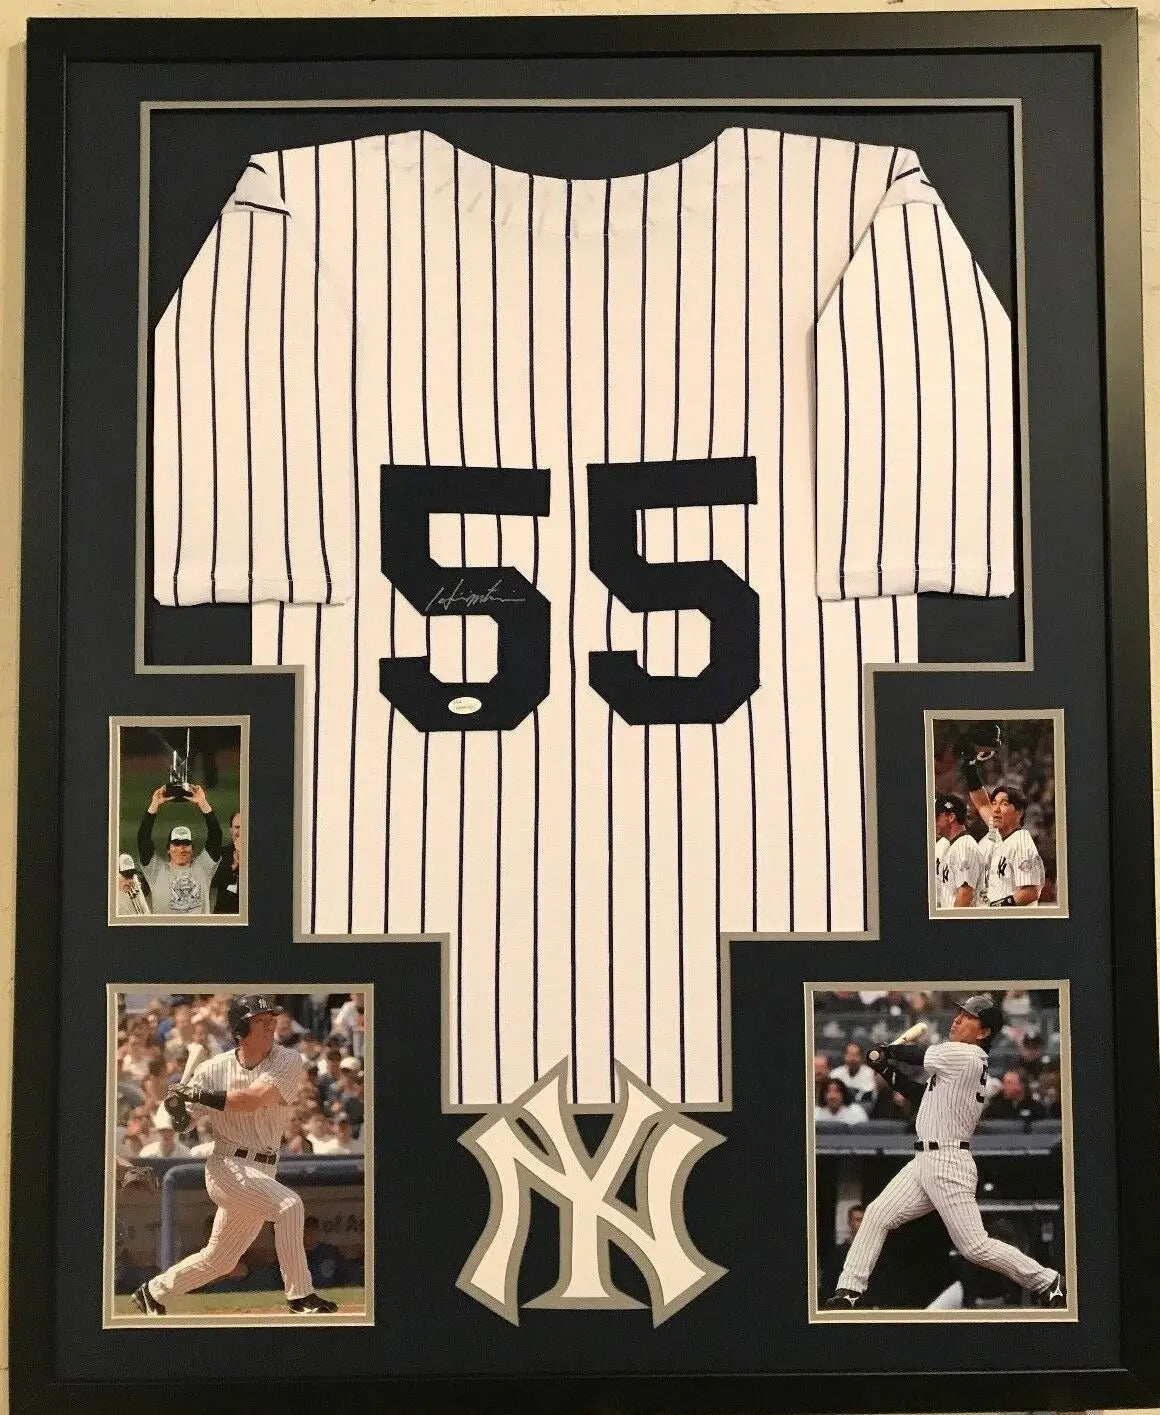 Hideki Matsui Signed New York Yankees 35x43 Custom Framed Jersey (JSA COA)